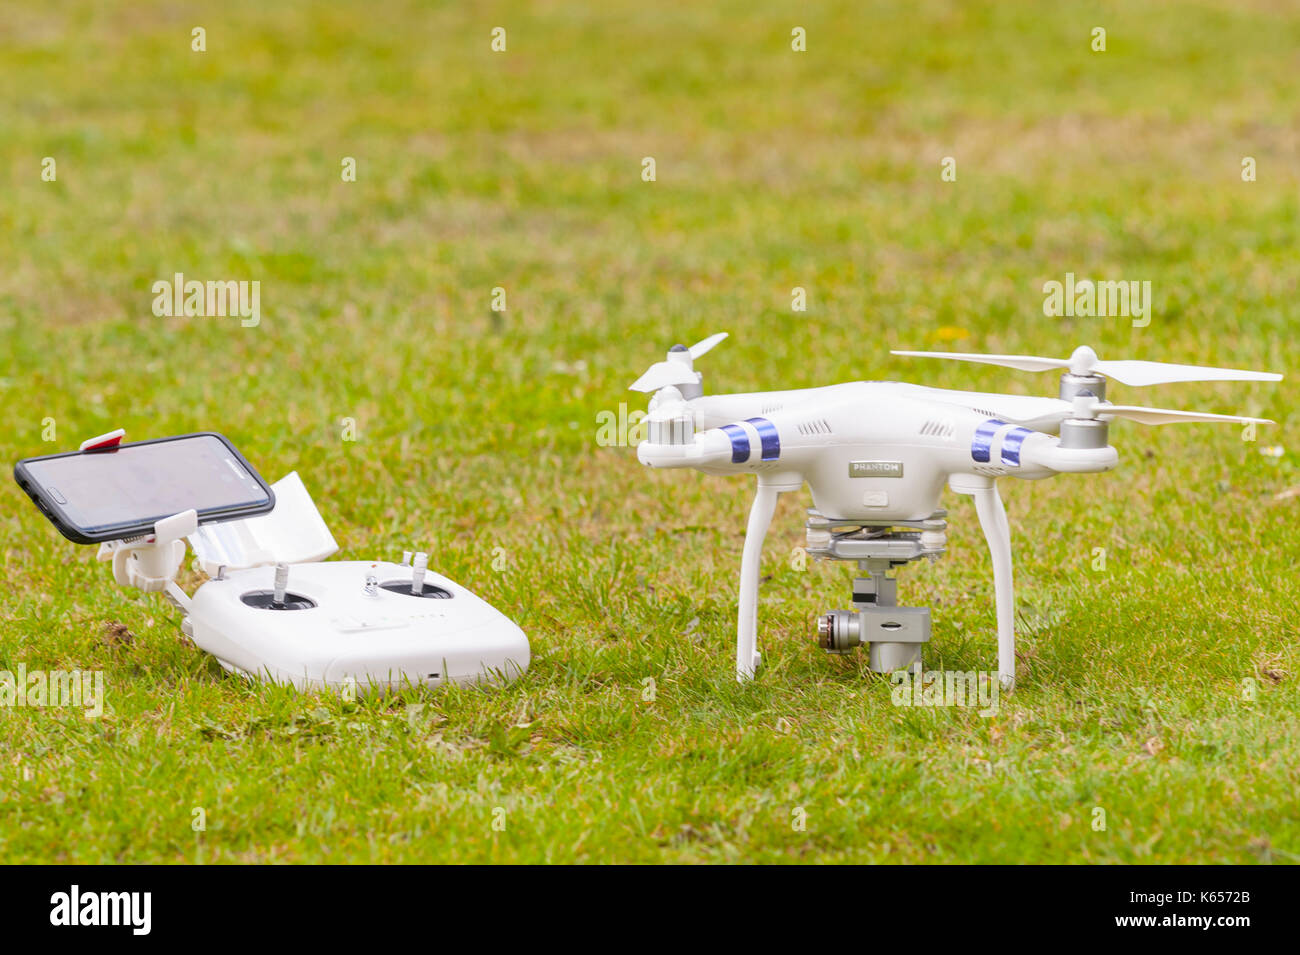 A Phantom drone with controller Stock Photo